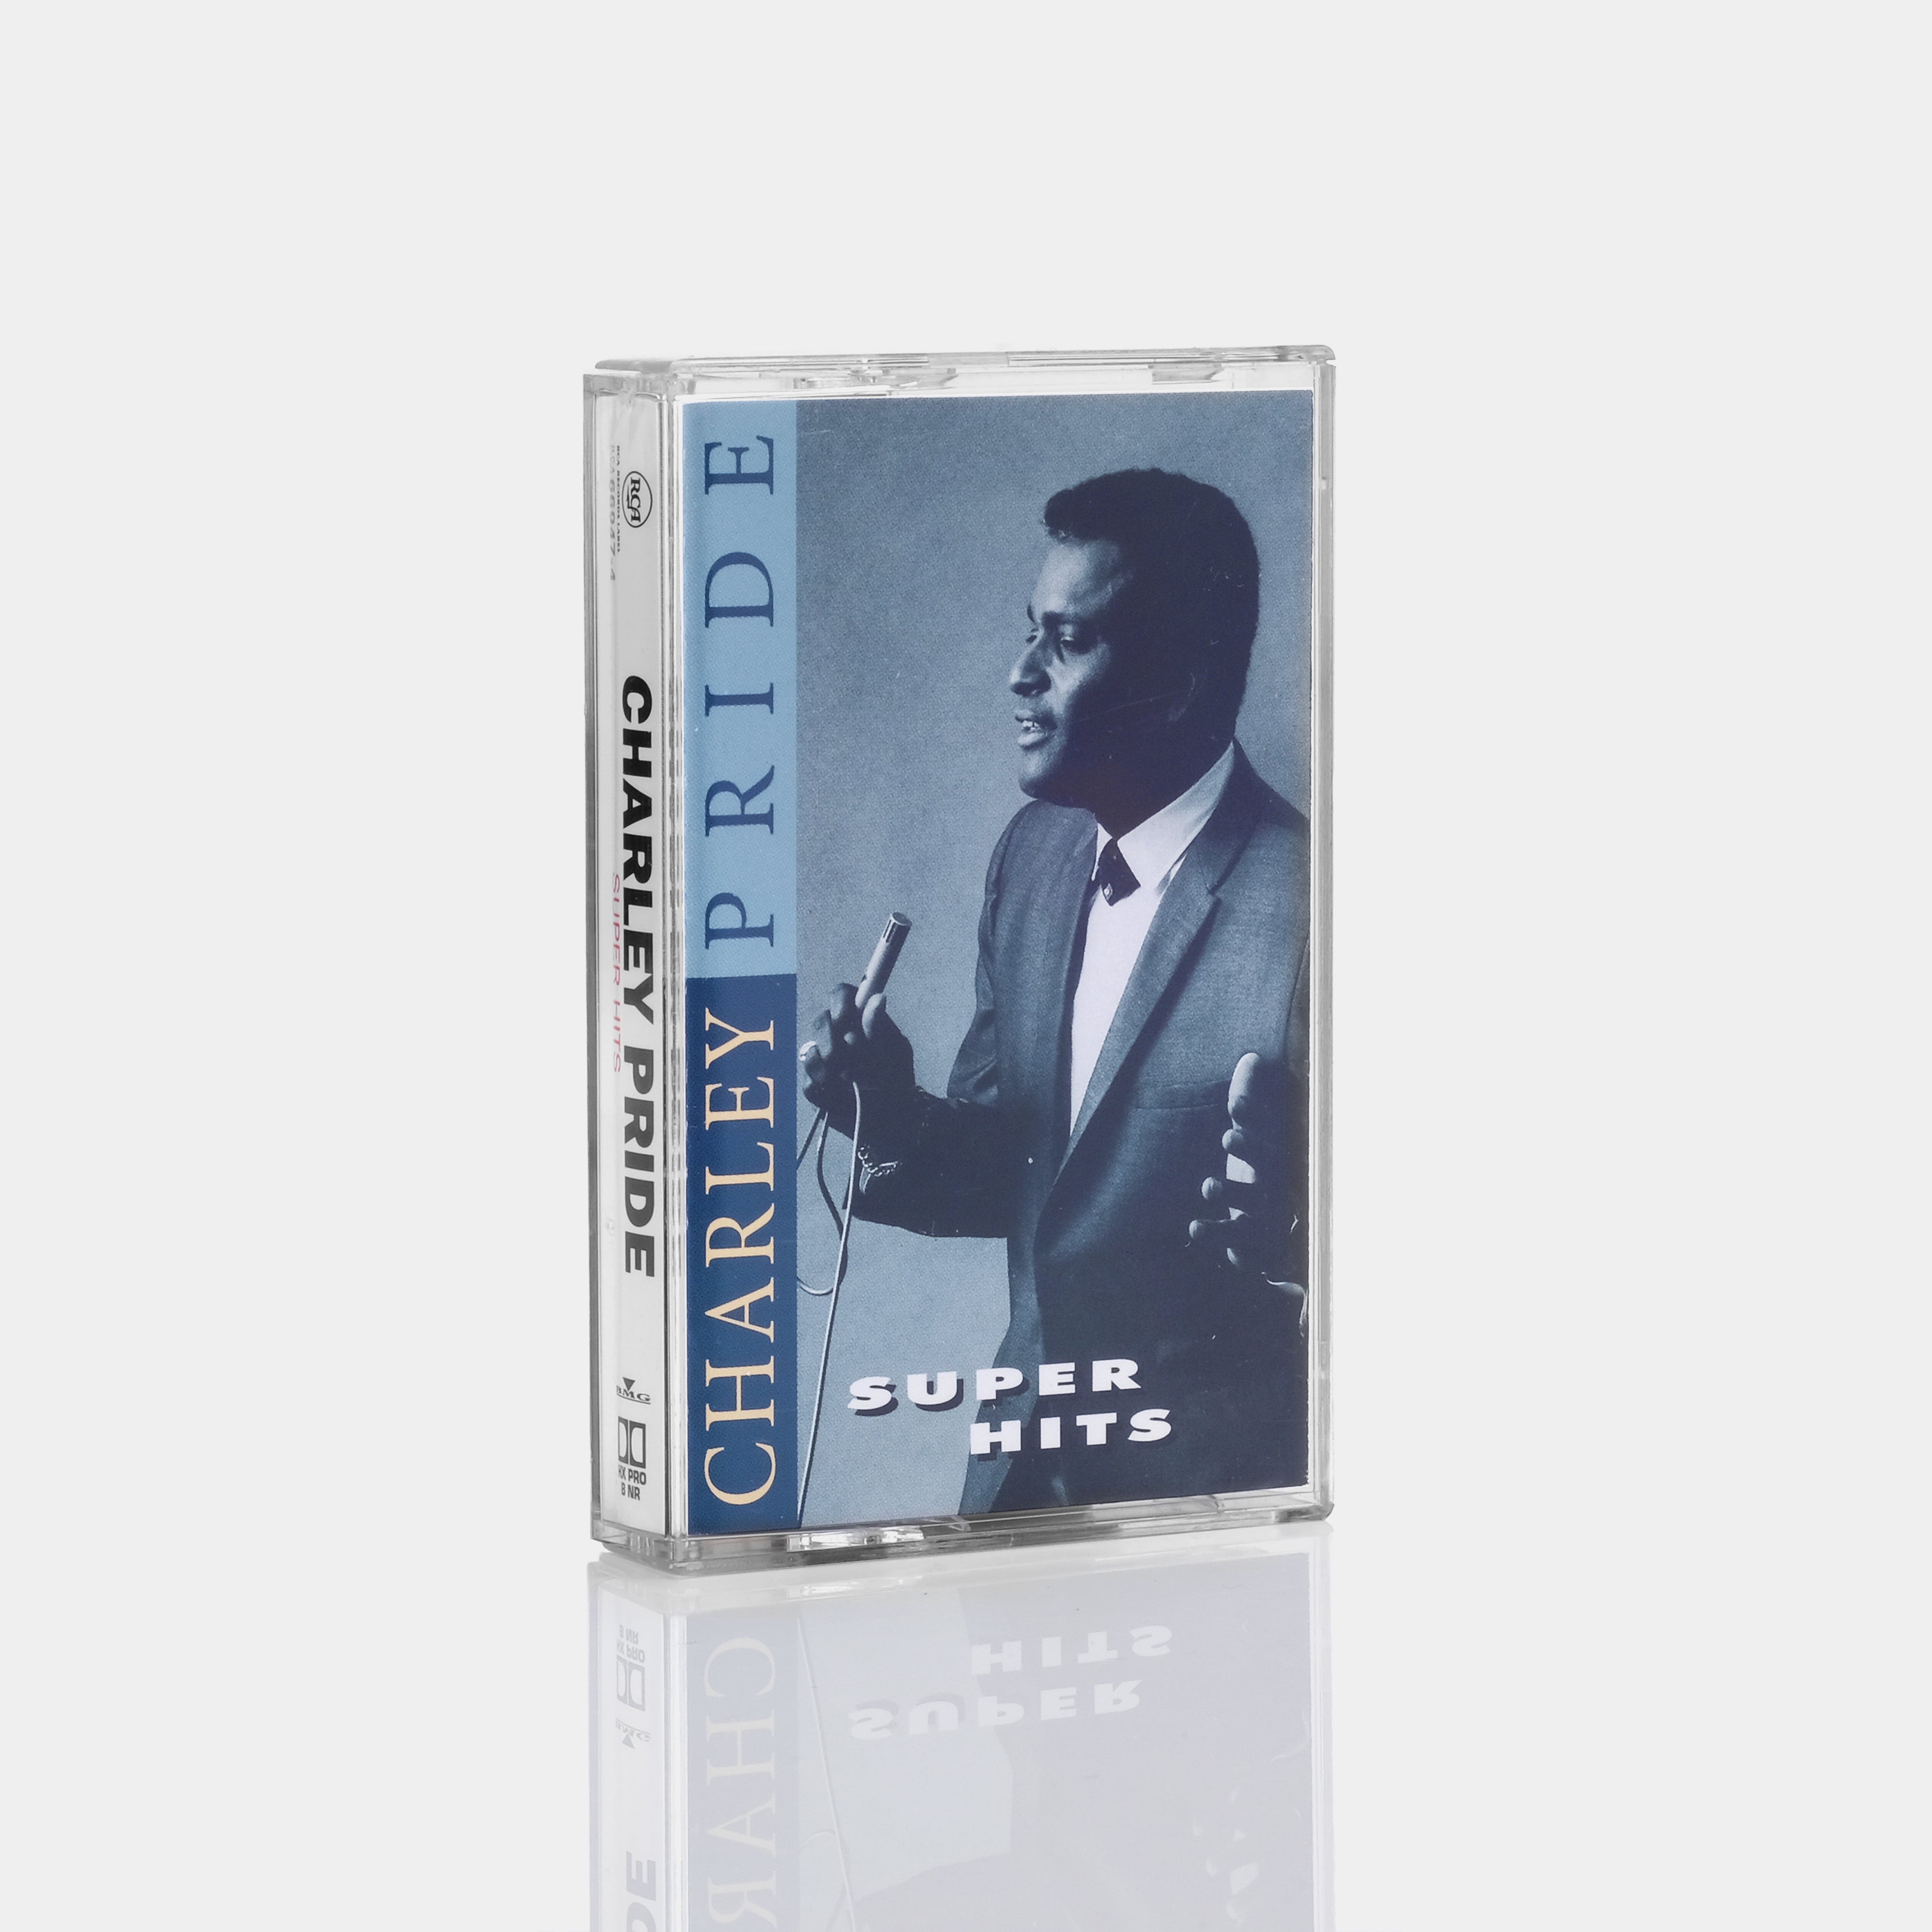 Charley Pride - Super Hits Cassette Tape